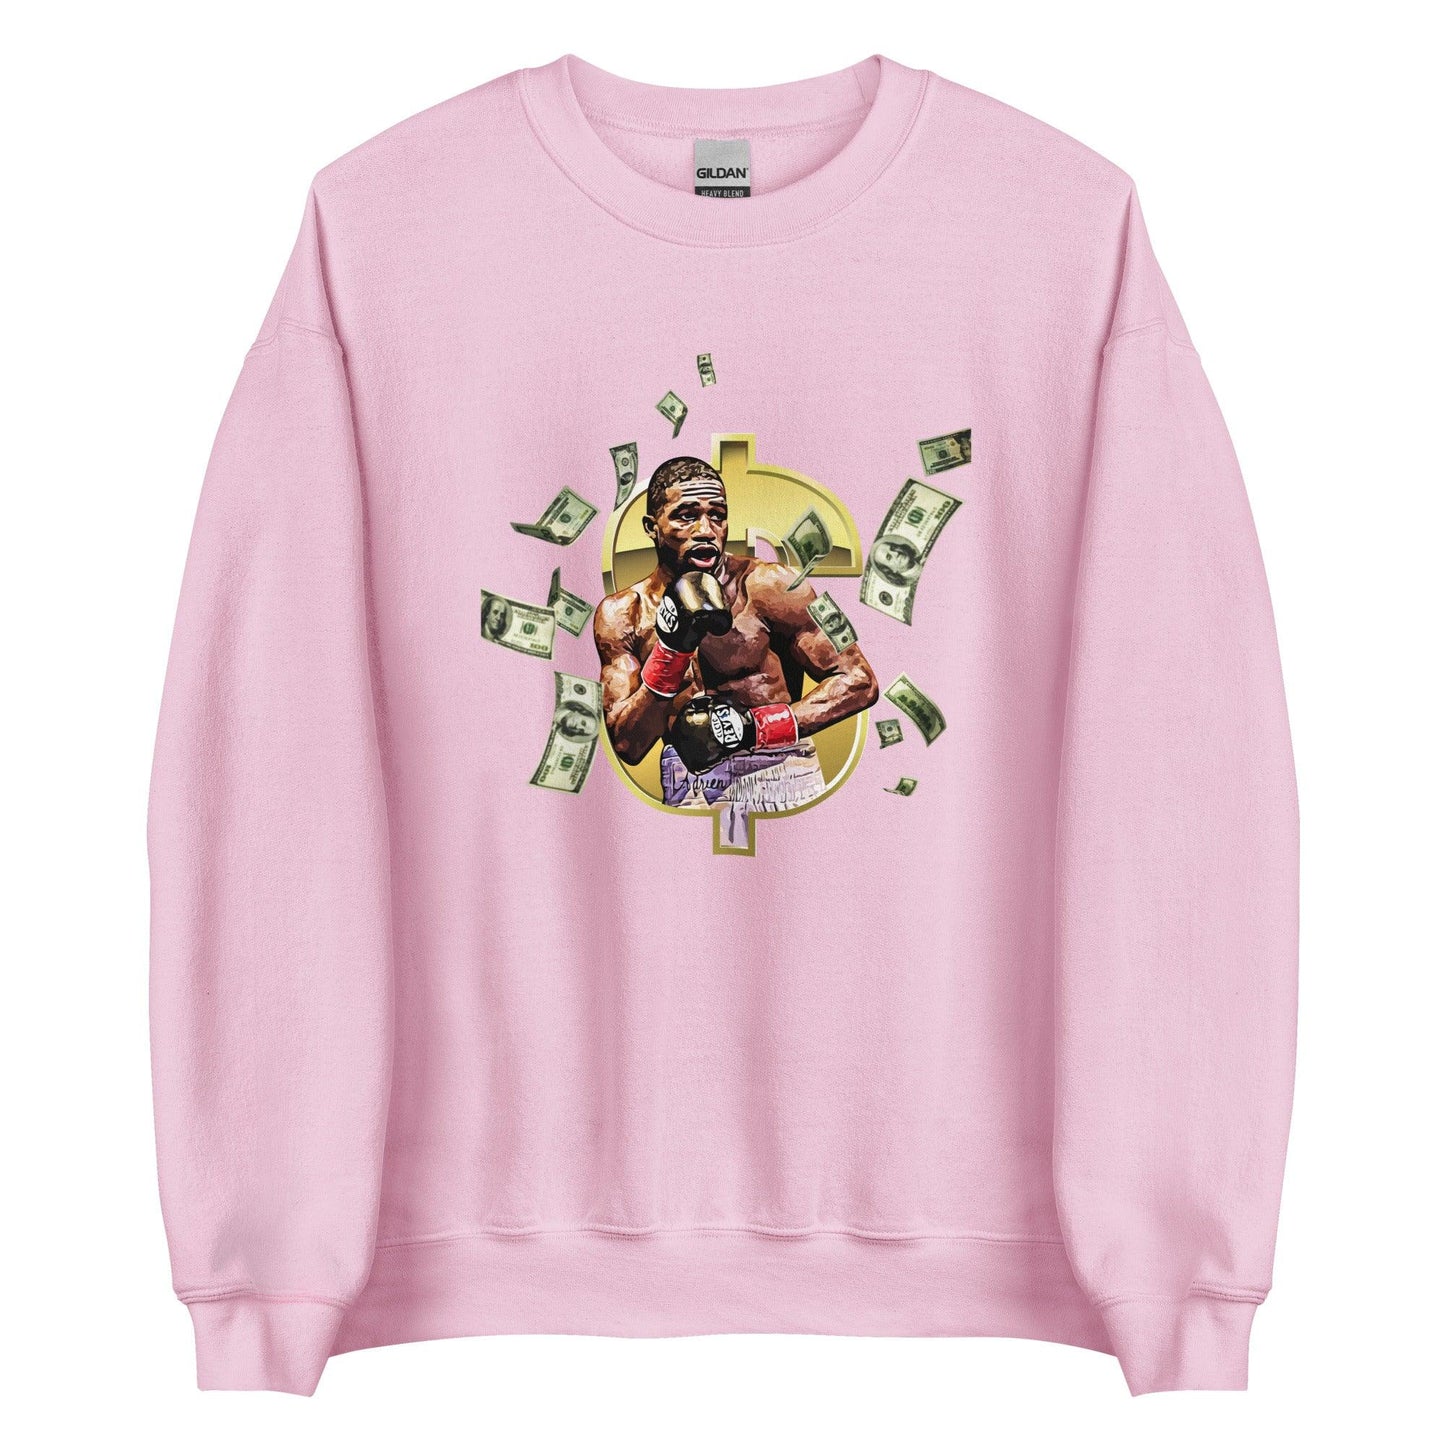 Adrien Broner "Dollar" Sweatshirt - Fan Arch